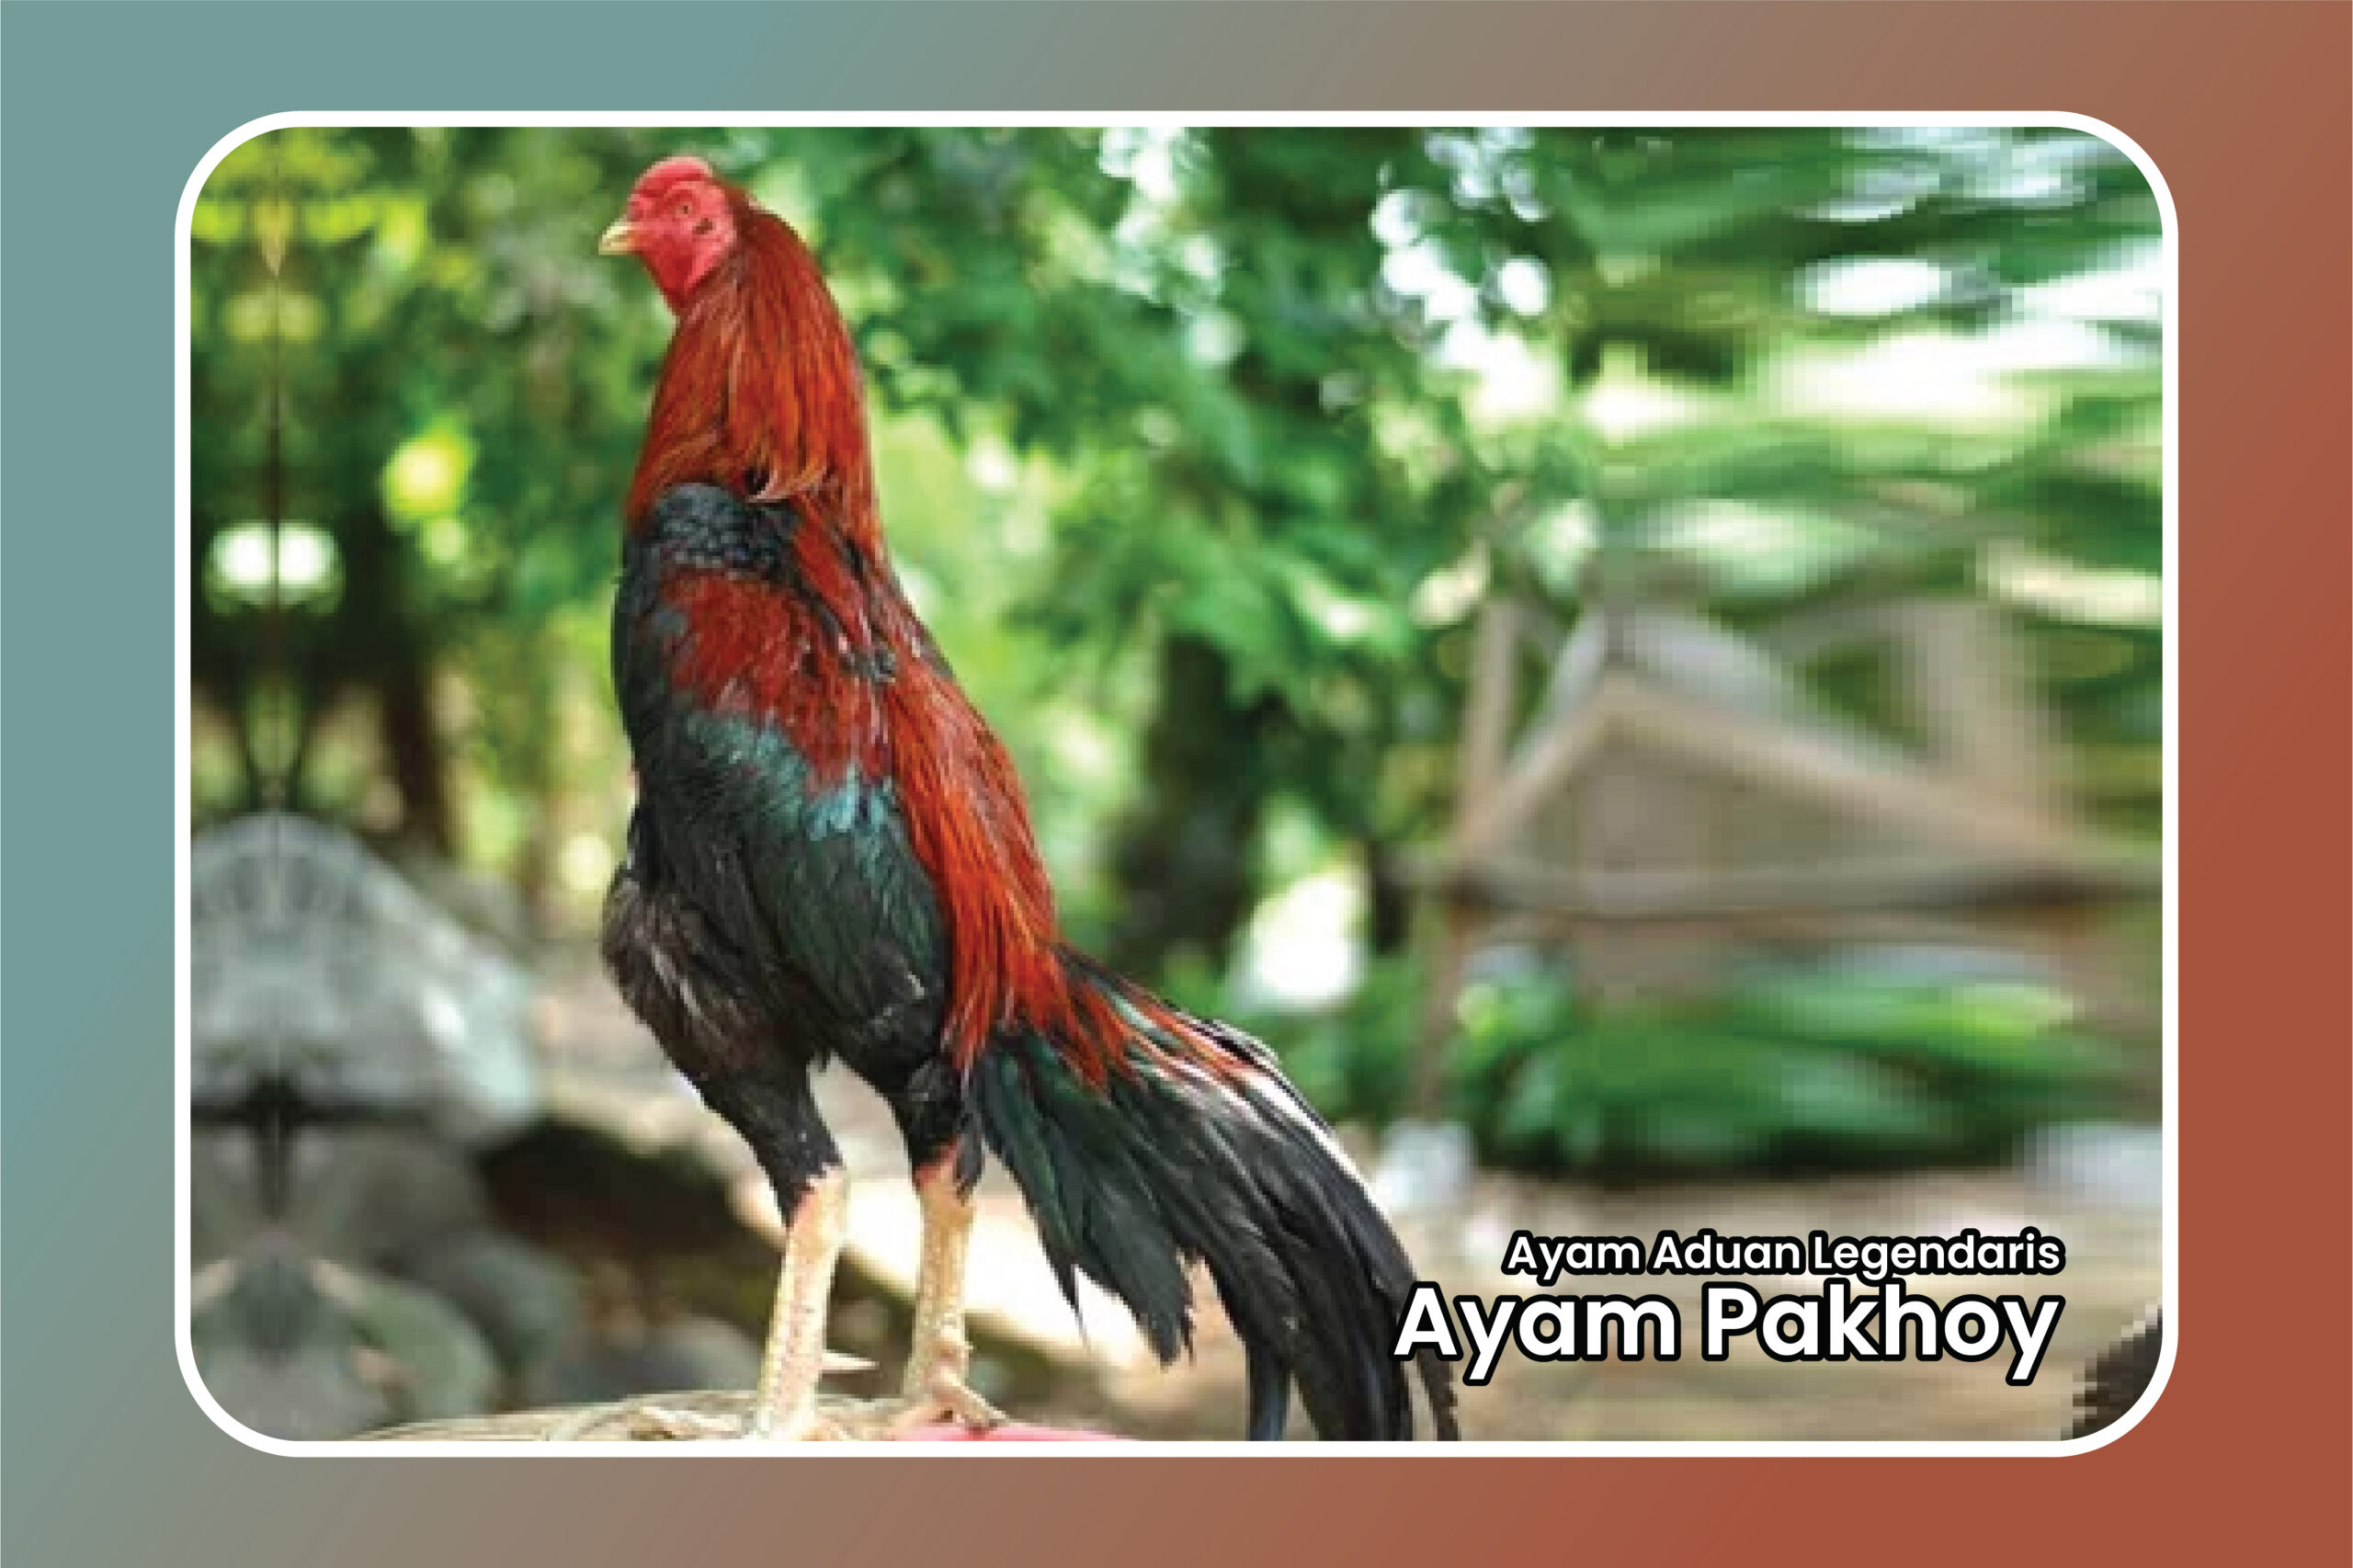 Ayam Pakhoy: Ayam Aduan Legendaris di Indonesia